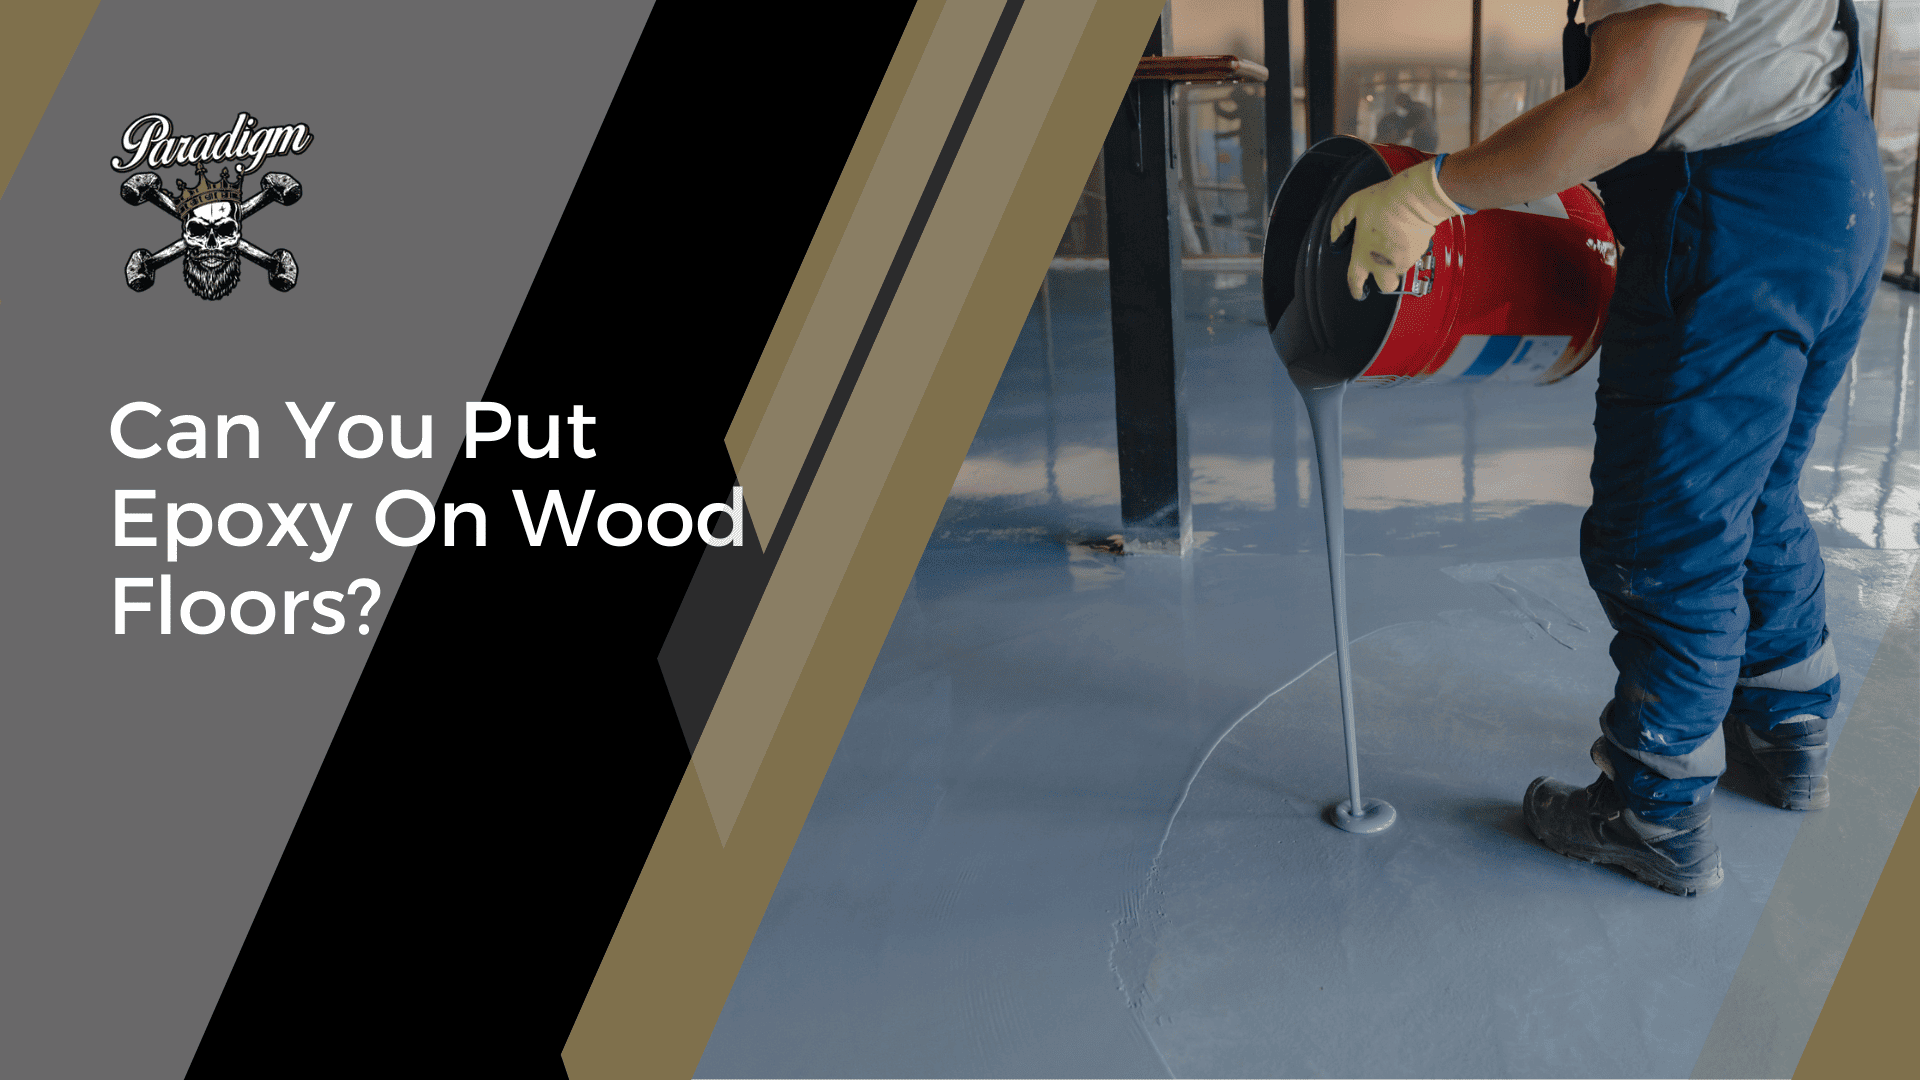 Can You Put Epoxy On Wood Floors?